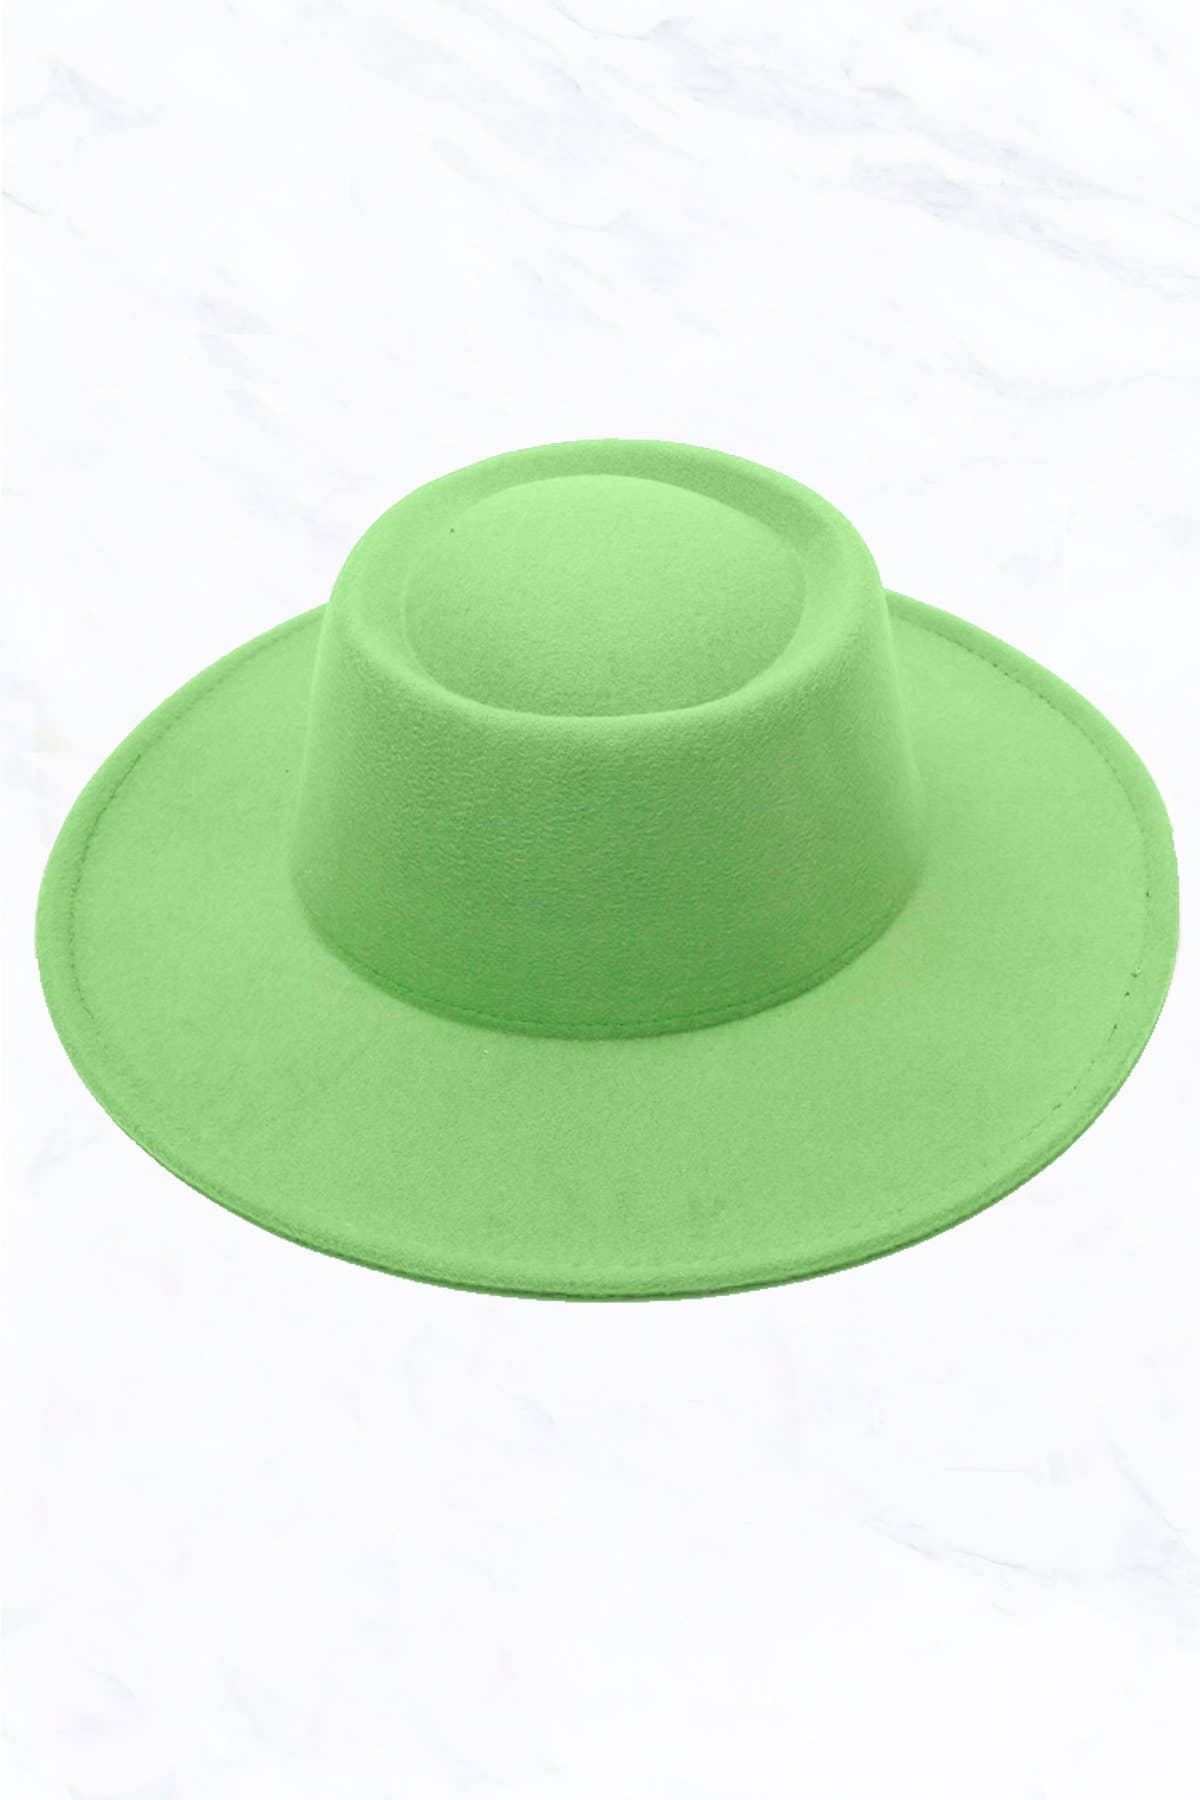 Suzie Q USA - Concave Top Jazz Fedora Hat: Fruit Green